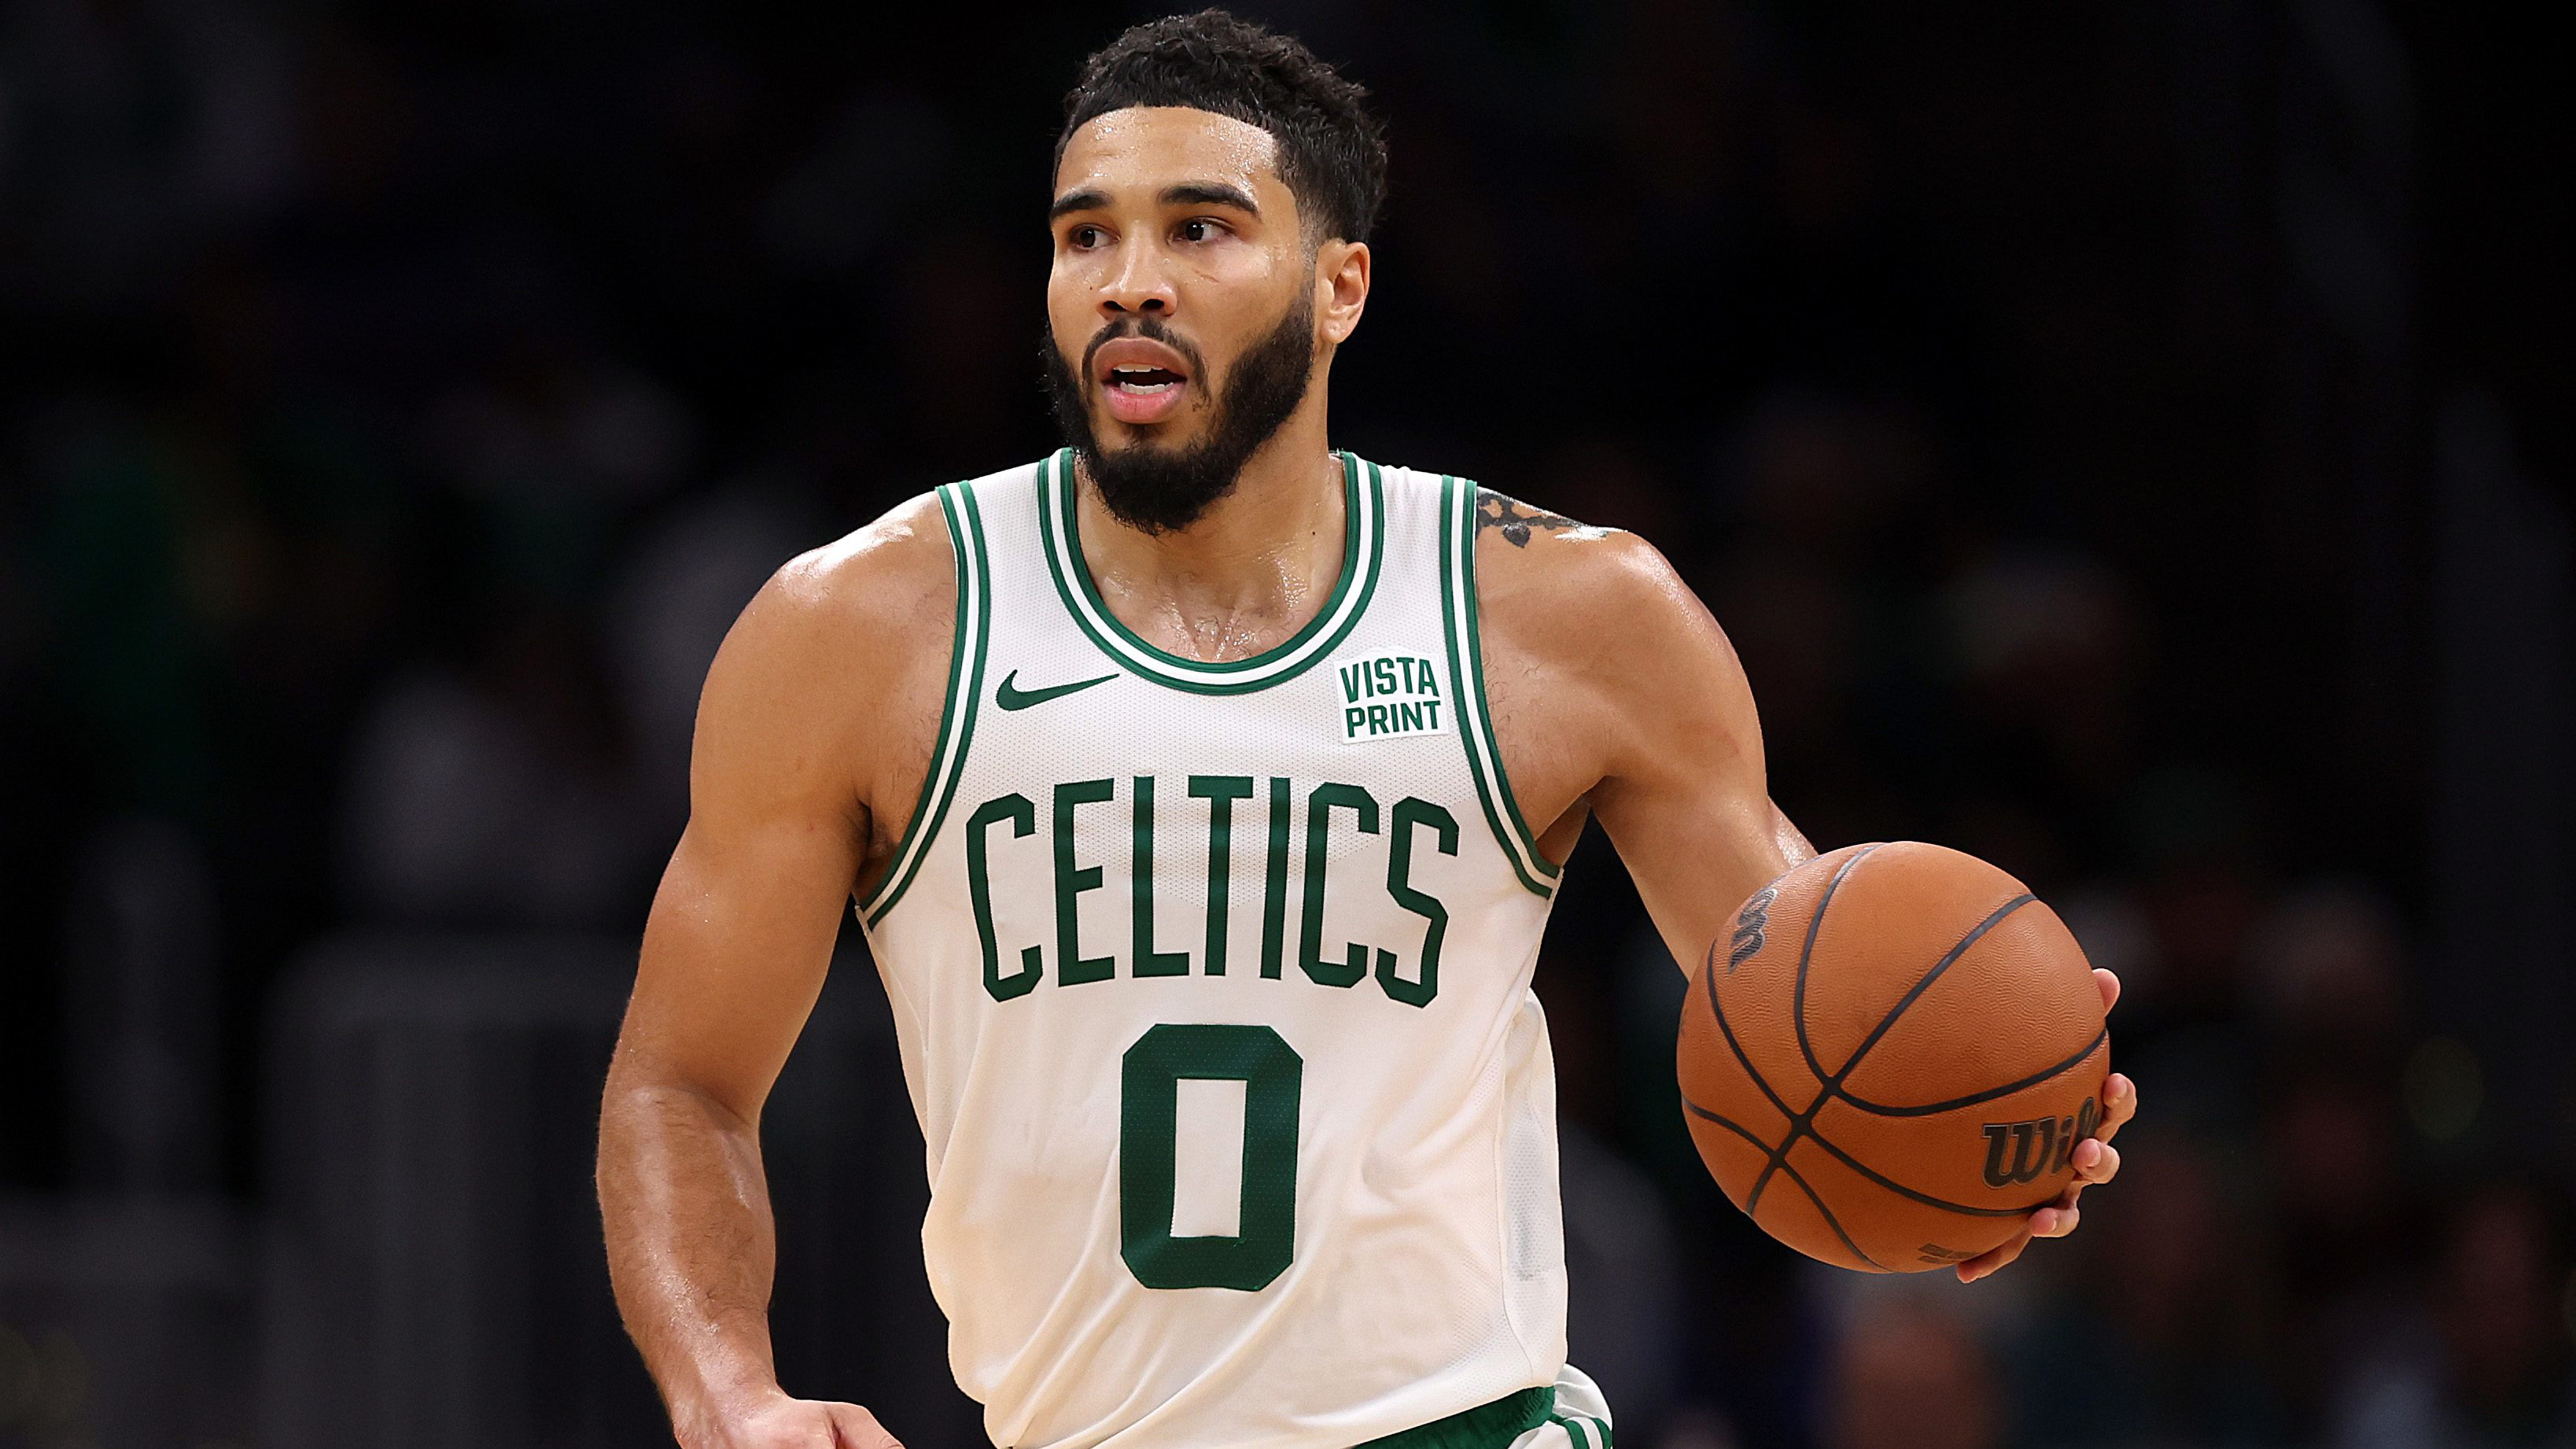 Celtics vs Knicks Live Stream How to Watch for Free